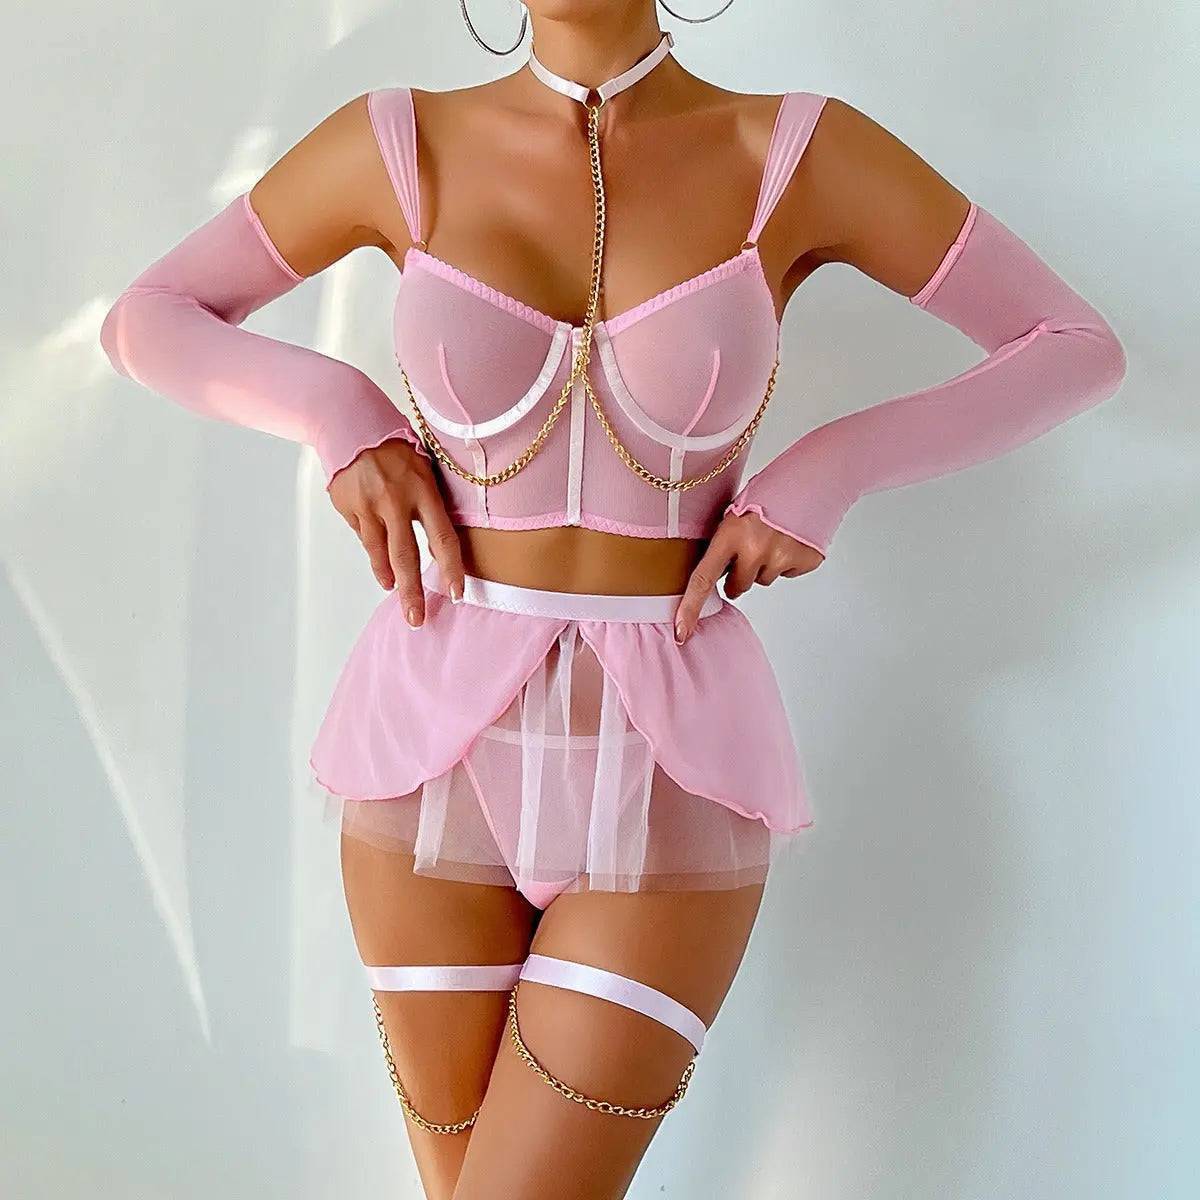 Pink lace lingerie Bra & Garter skirt Set&Gloves-SexBodyShop